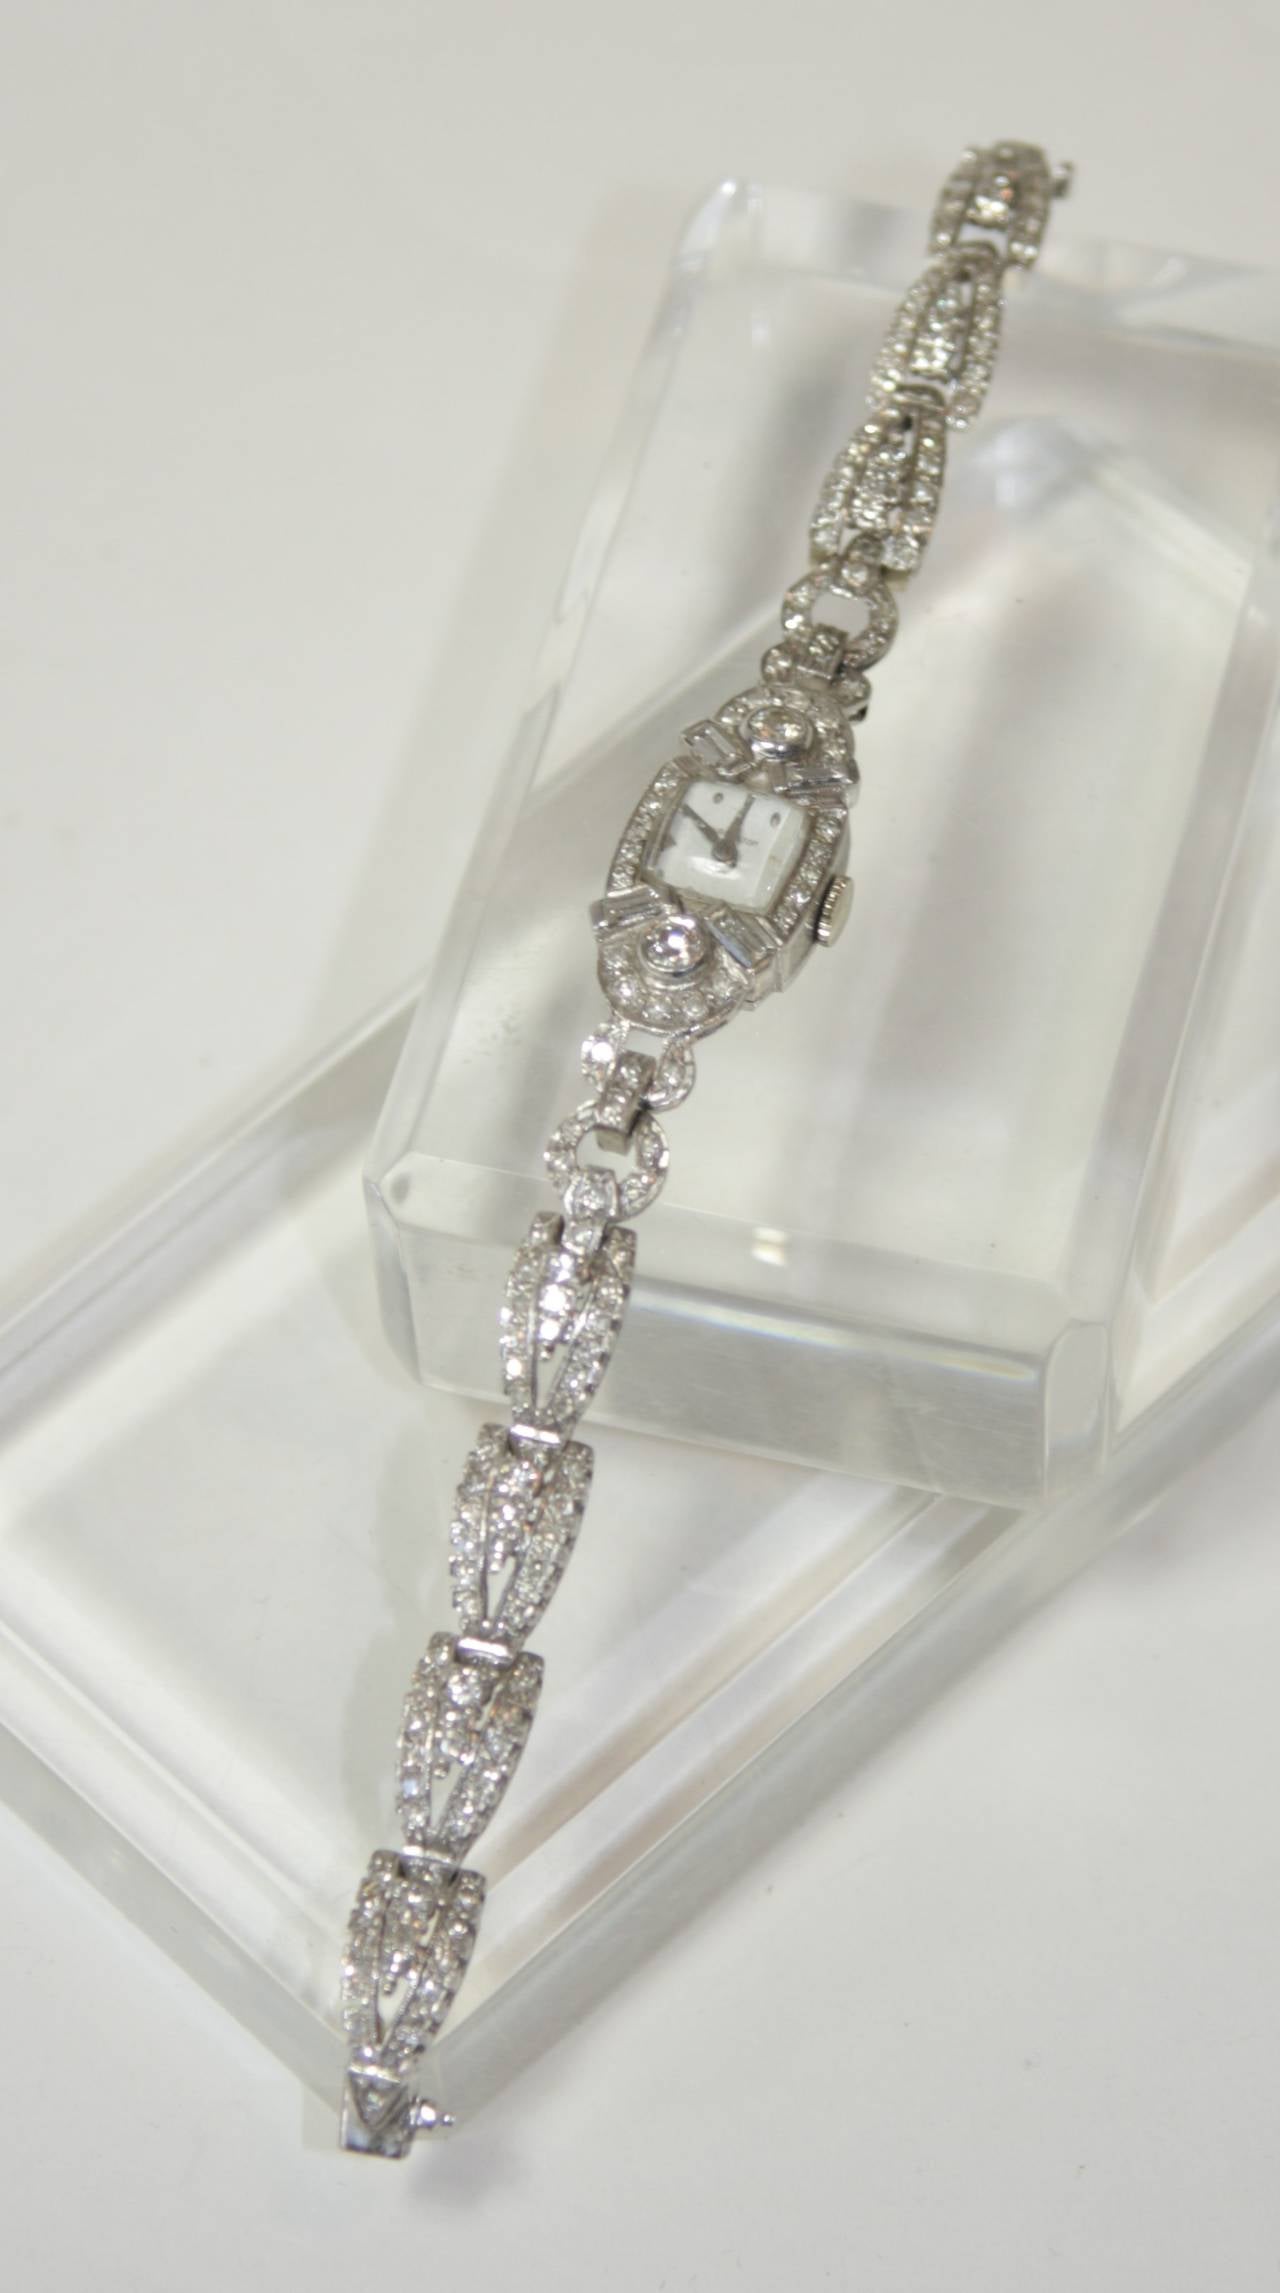 Hamilton 1940s Lady's Platinum and Diamond Bracelet Wristwatch 1